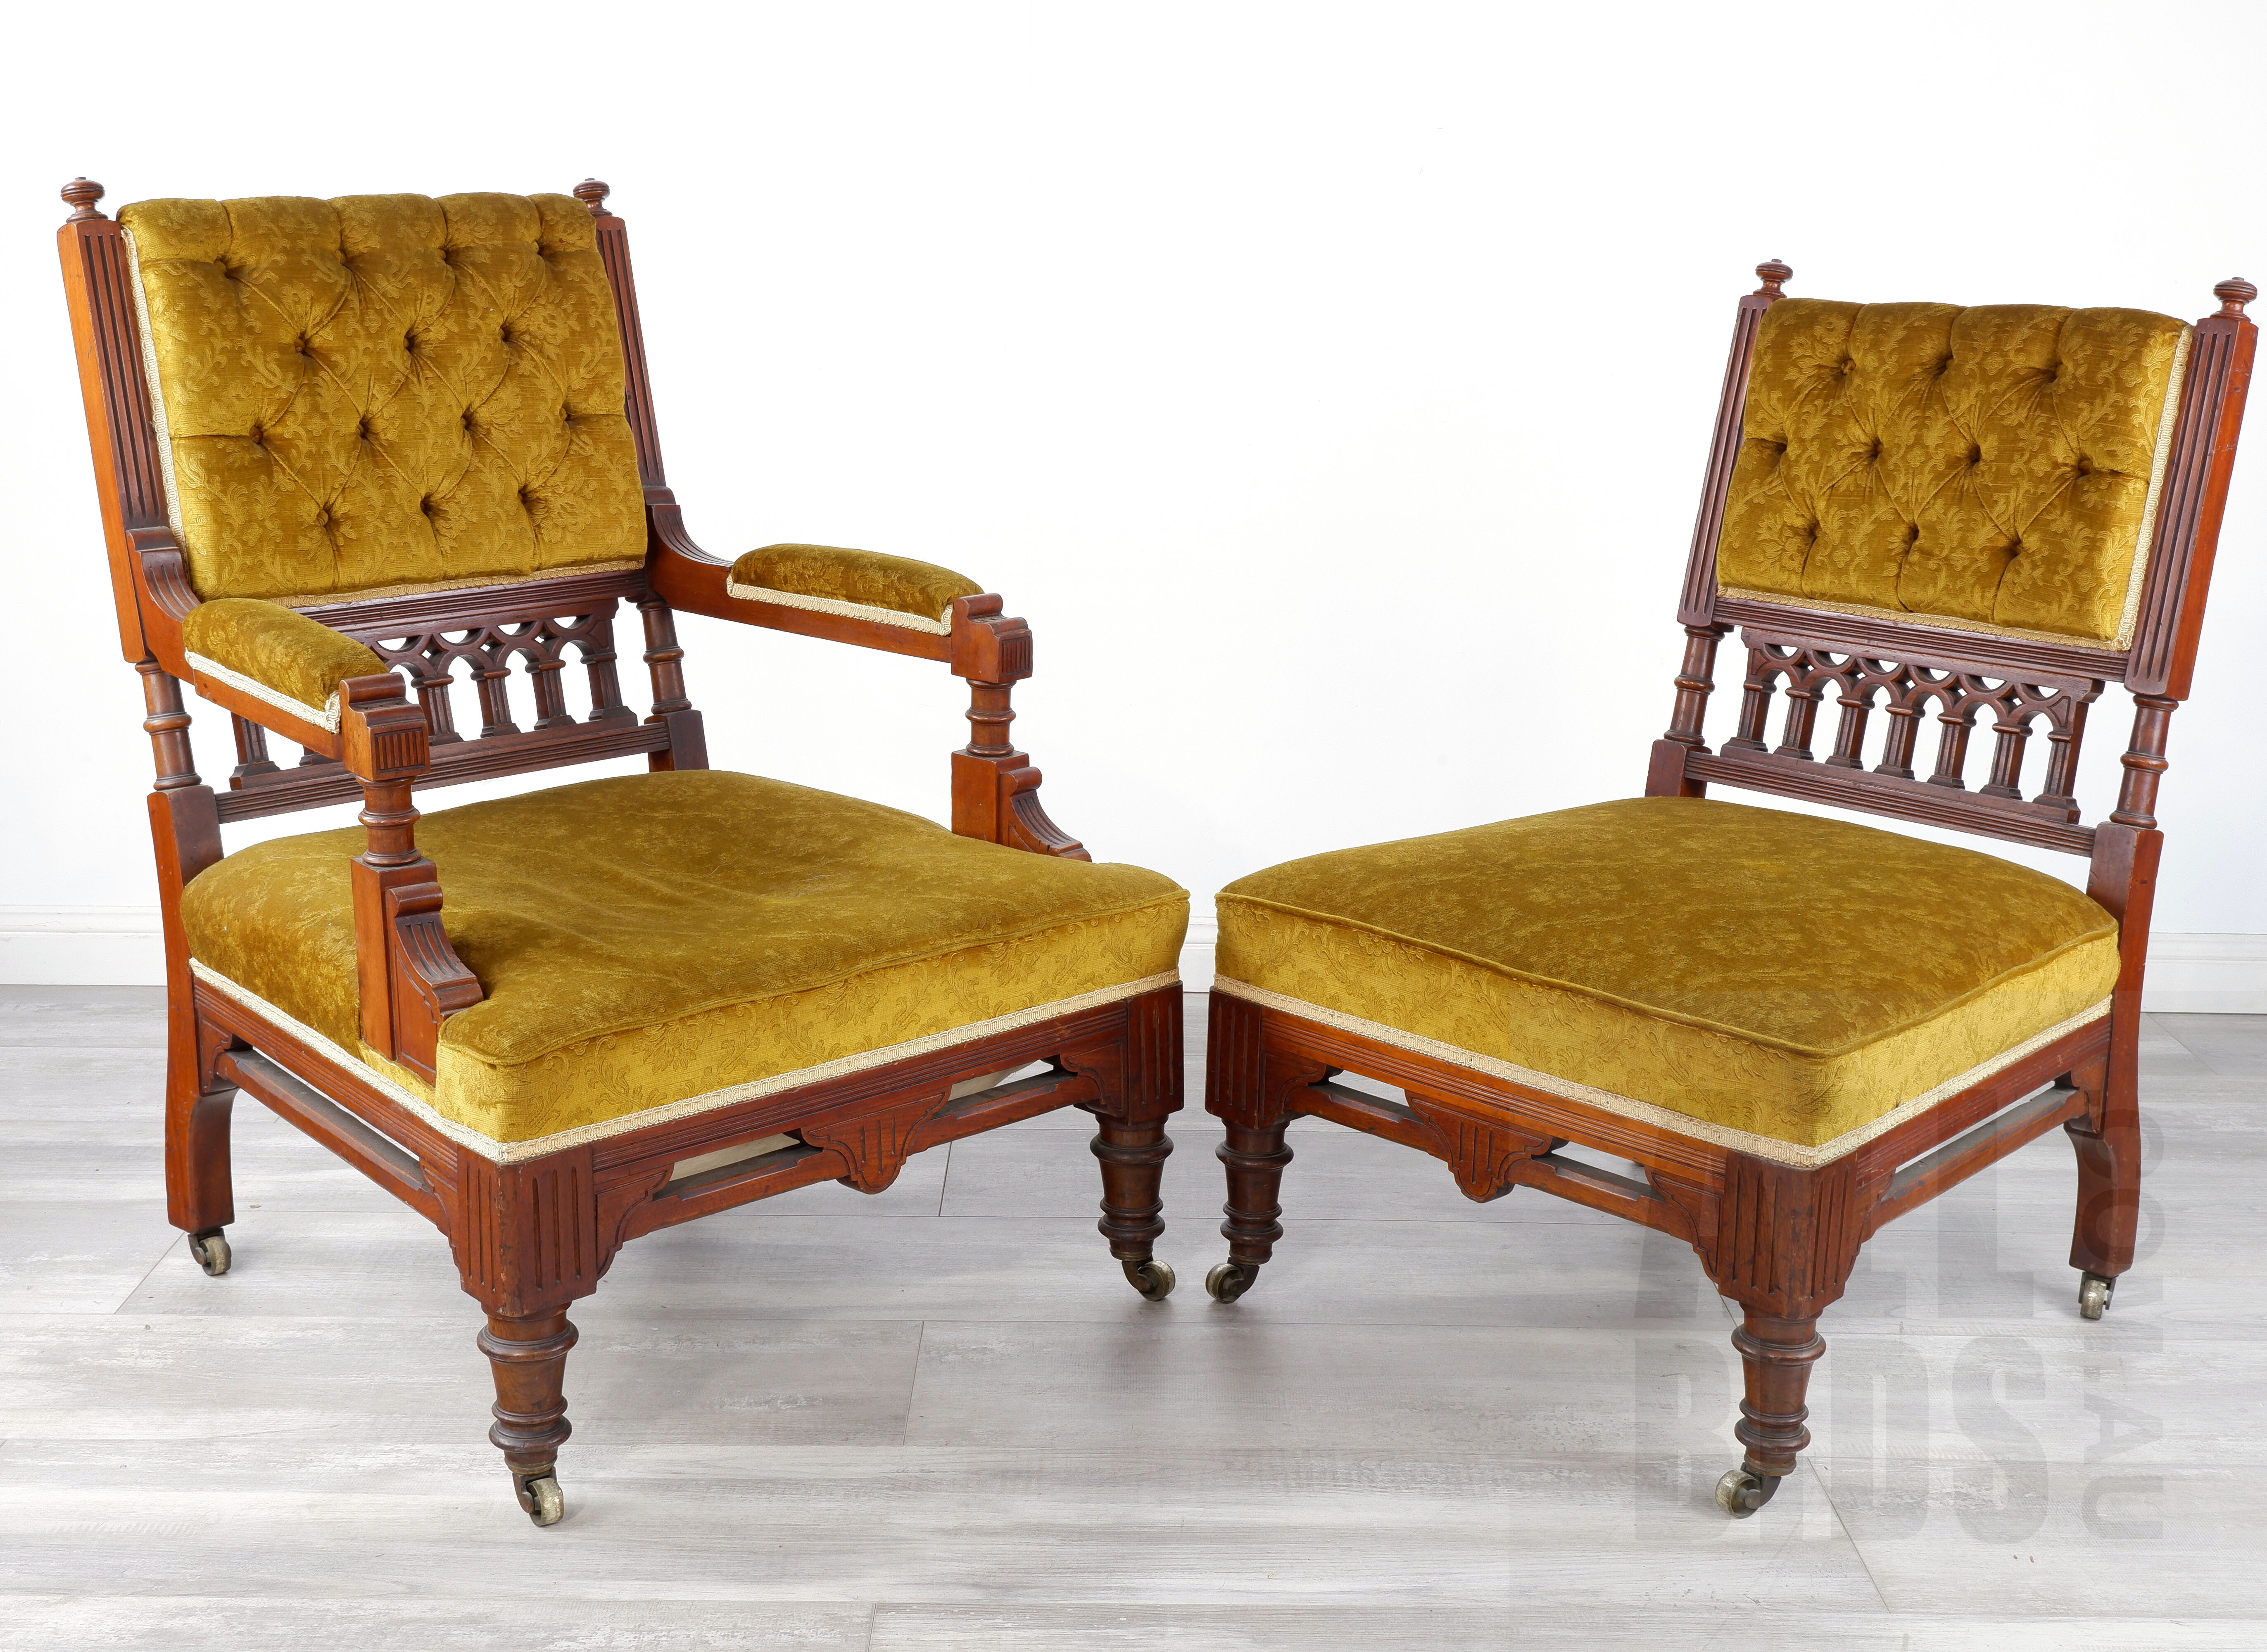 'Pair of Victorian Mahogany Aesthetic Movement Salon Chairs, British Circa 1880-1890'